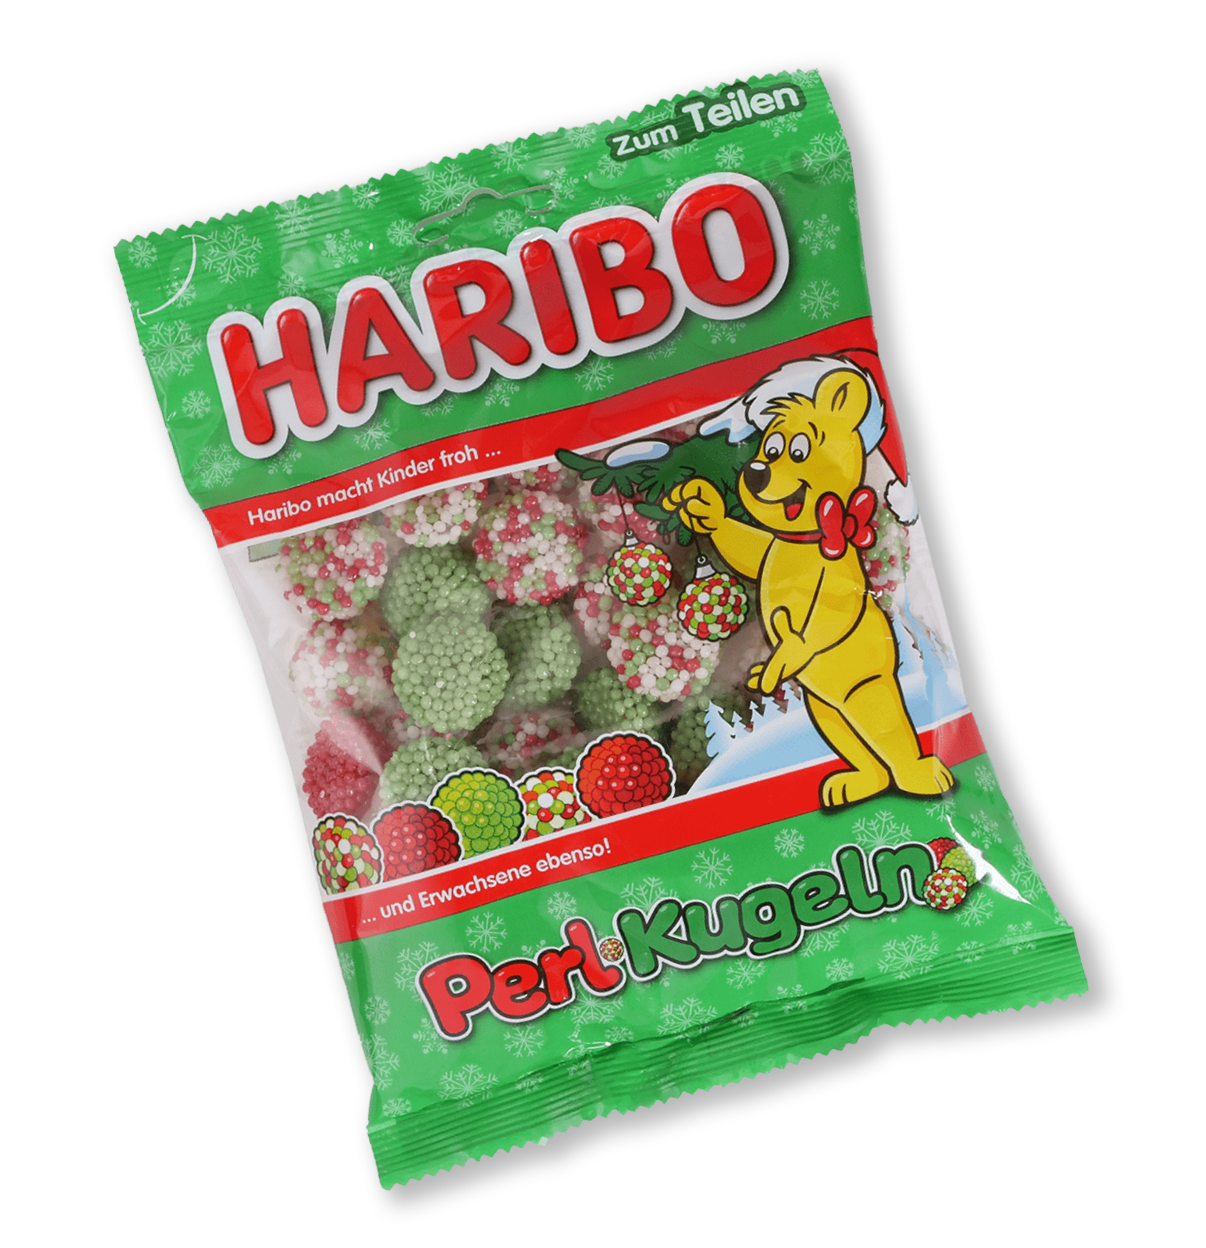 German Haribo Candy